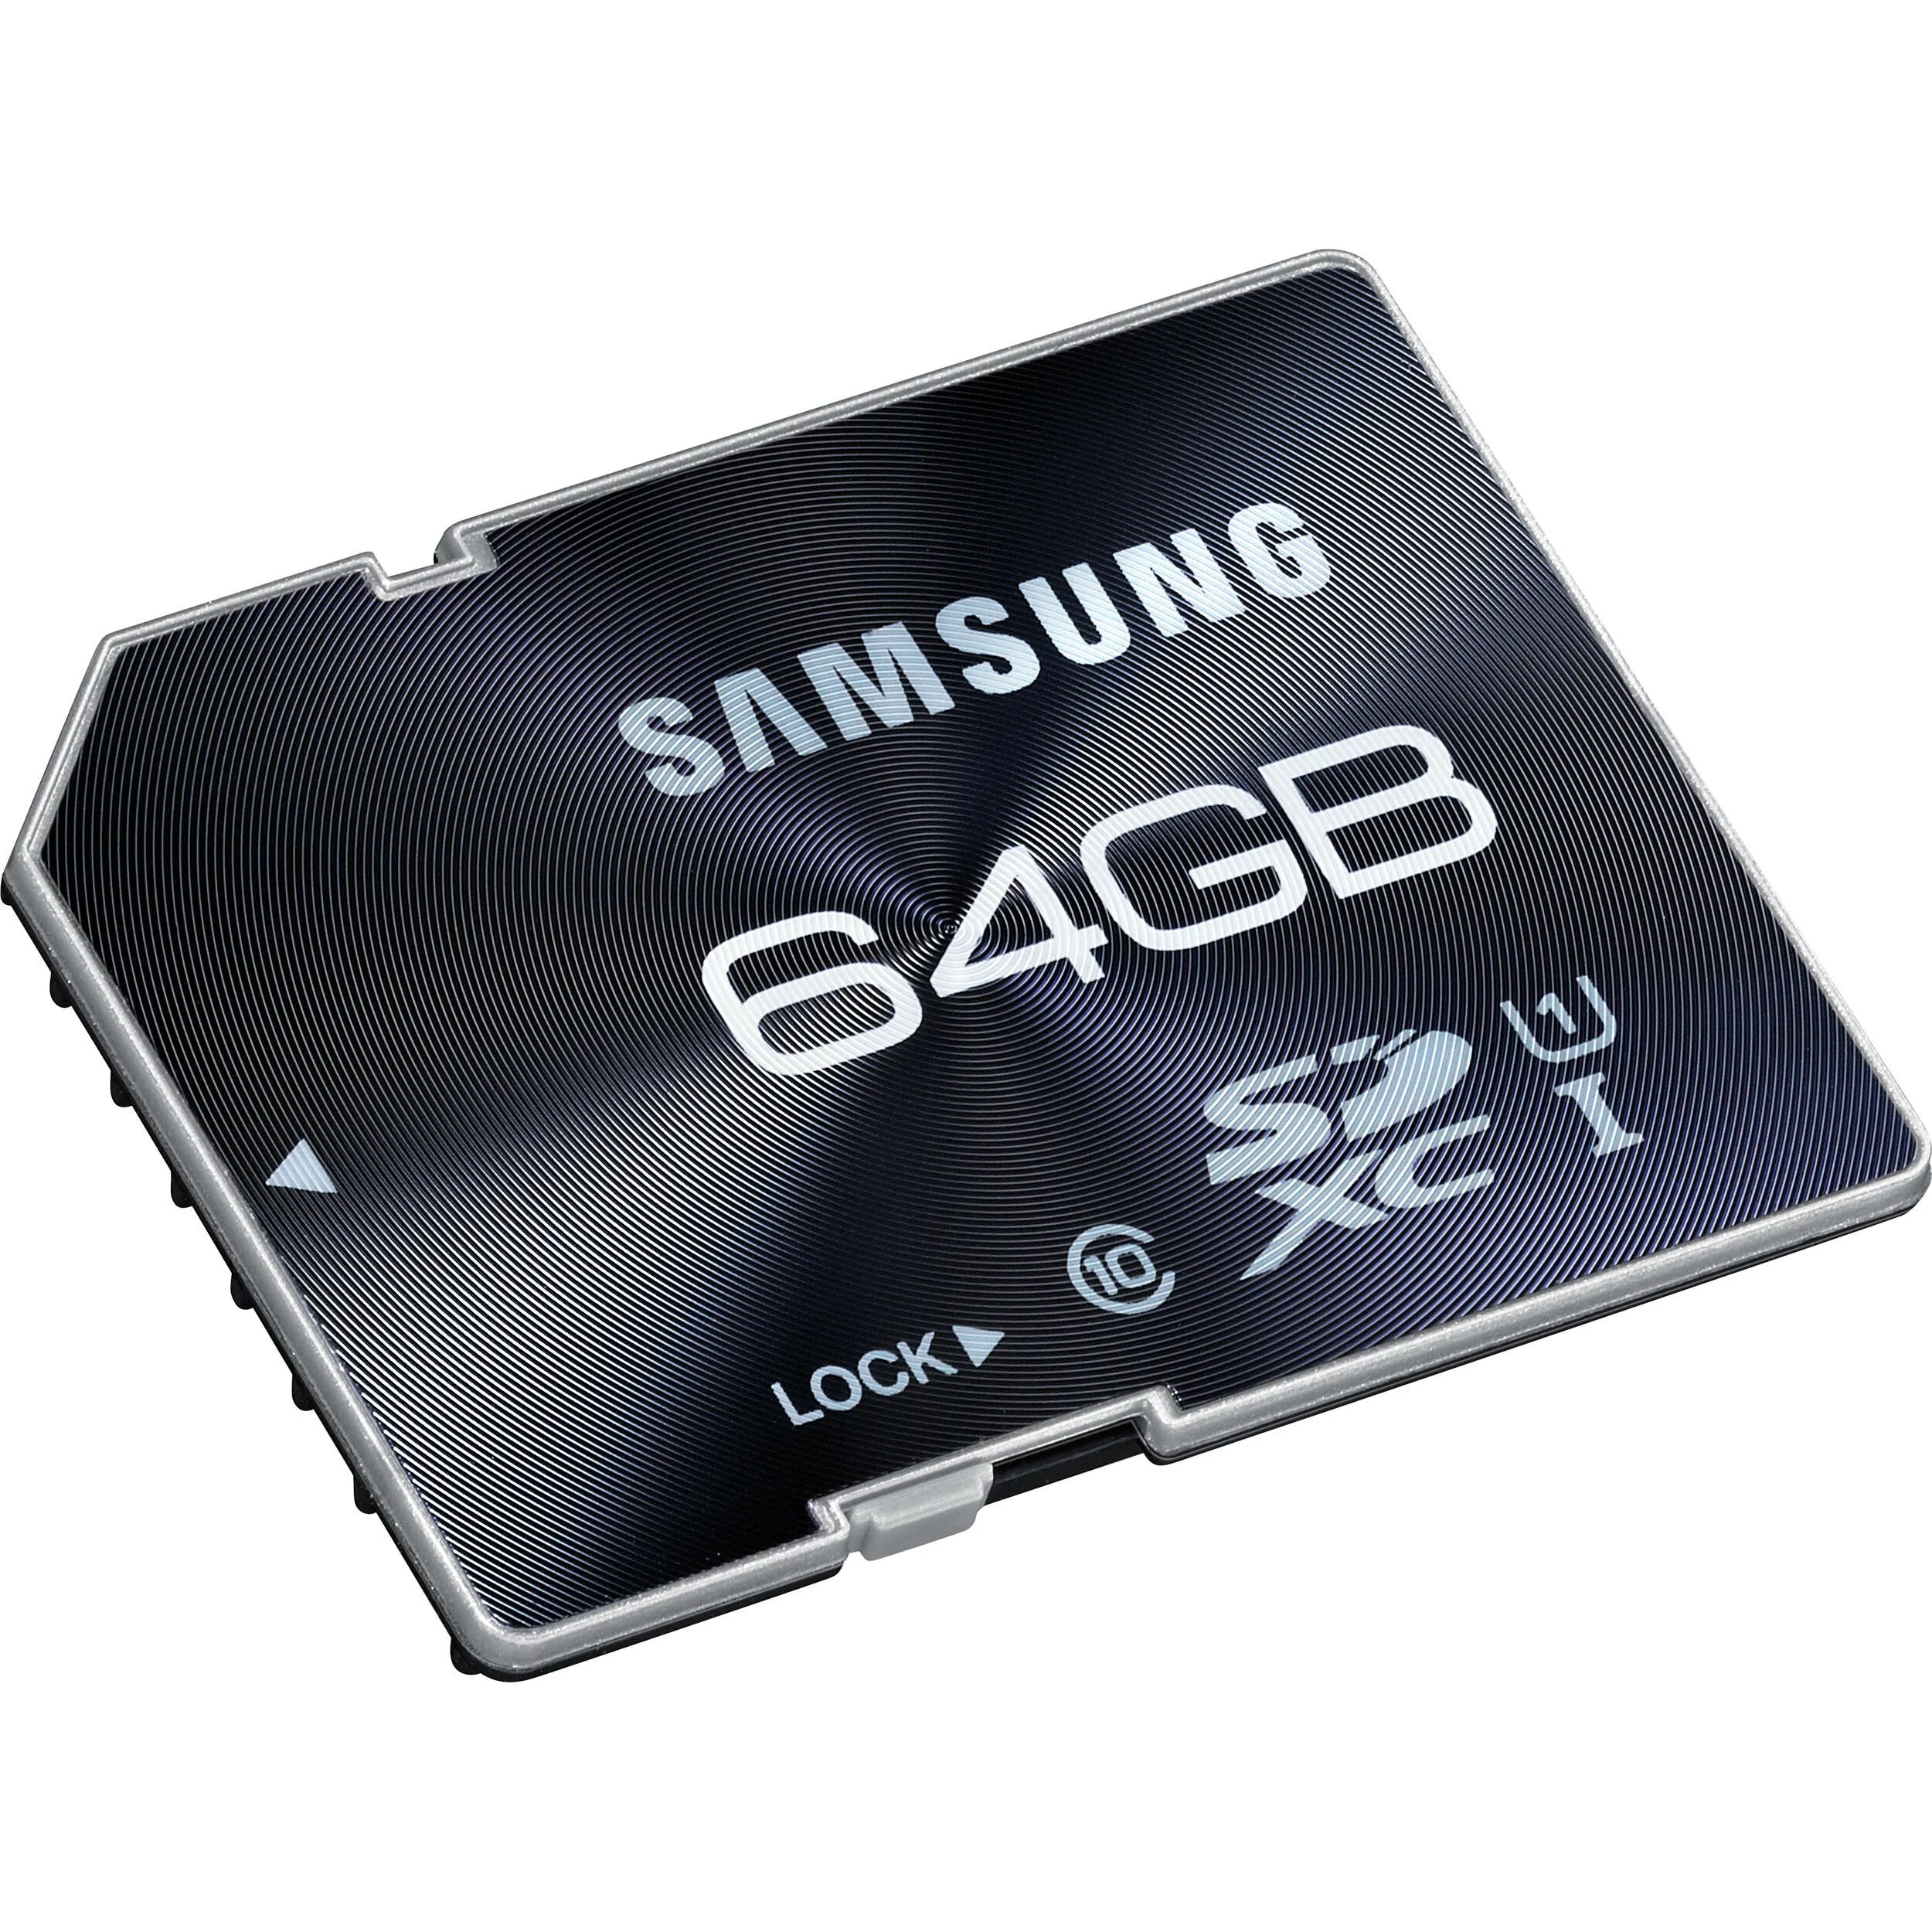 Samsung SD Card. SD Card 64 GB. СД карта 32 самсунг SDHC. Карта памяти 16 ГБ самсунг.